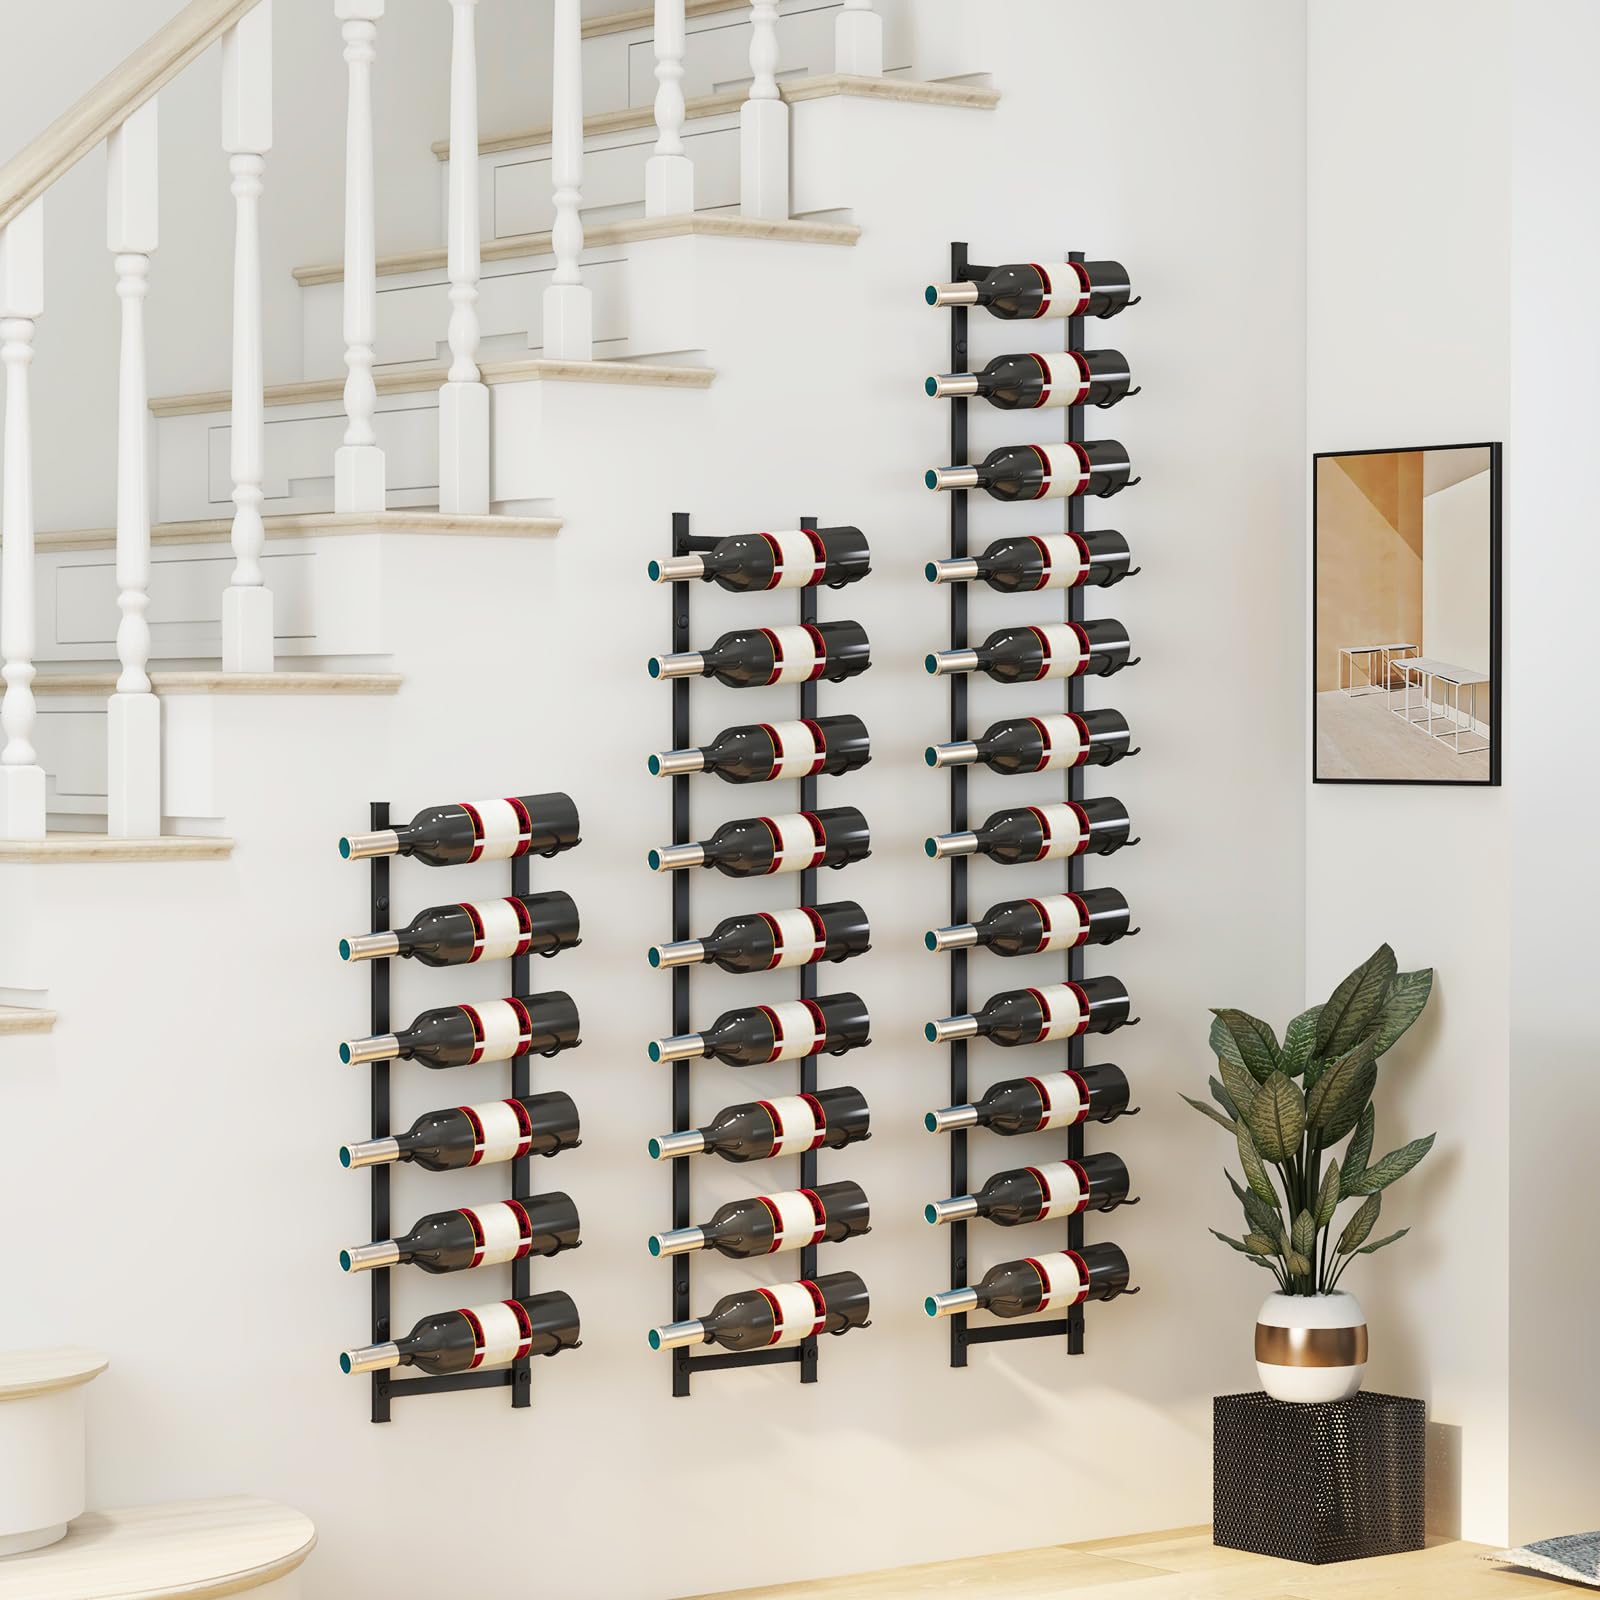 Giantex Wall Mounted Wine Rack for 9-Bottles, Metal Wall Wine Racks Organizer